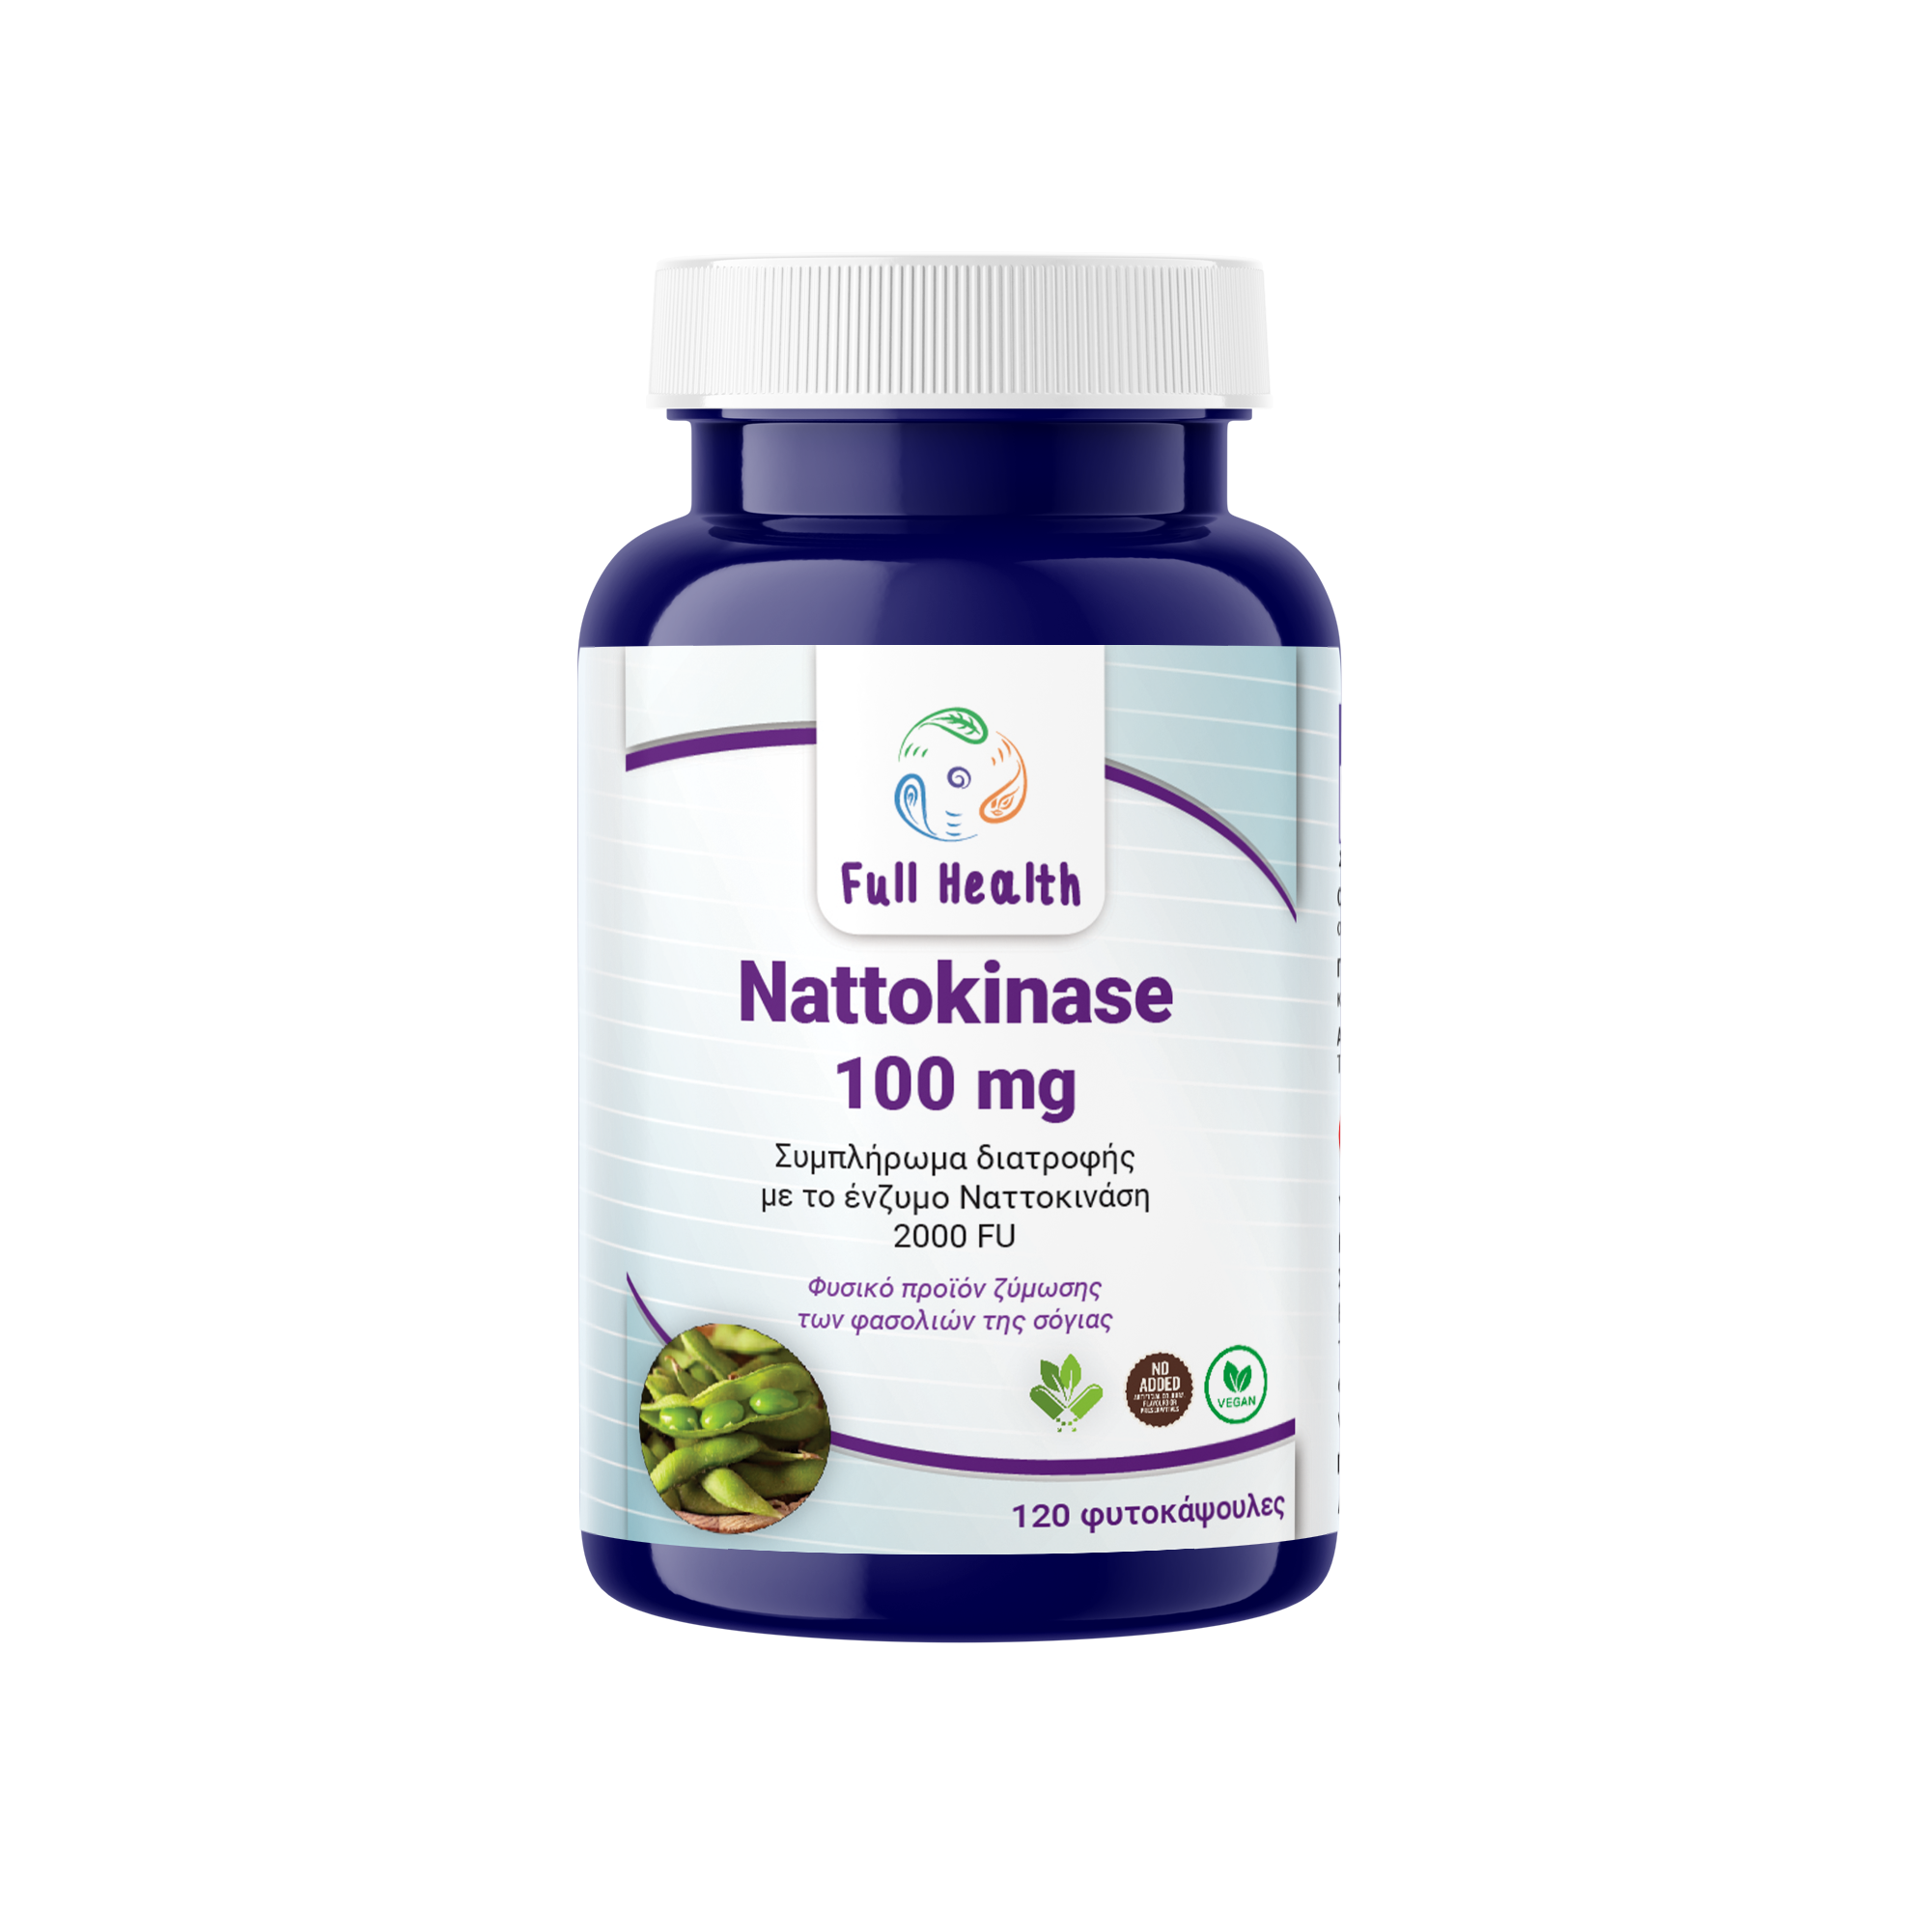 FULL HEALTH NATTOKINASE 100 mg 120 Vcaps (Συμπλήρωμα διατροφής με το ένζυμο Ναττοκινάση 2000 FU, φυσικό προϊόν ζύμωσης των φασολιών της σόγιας)